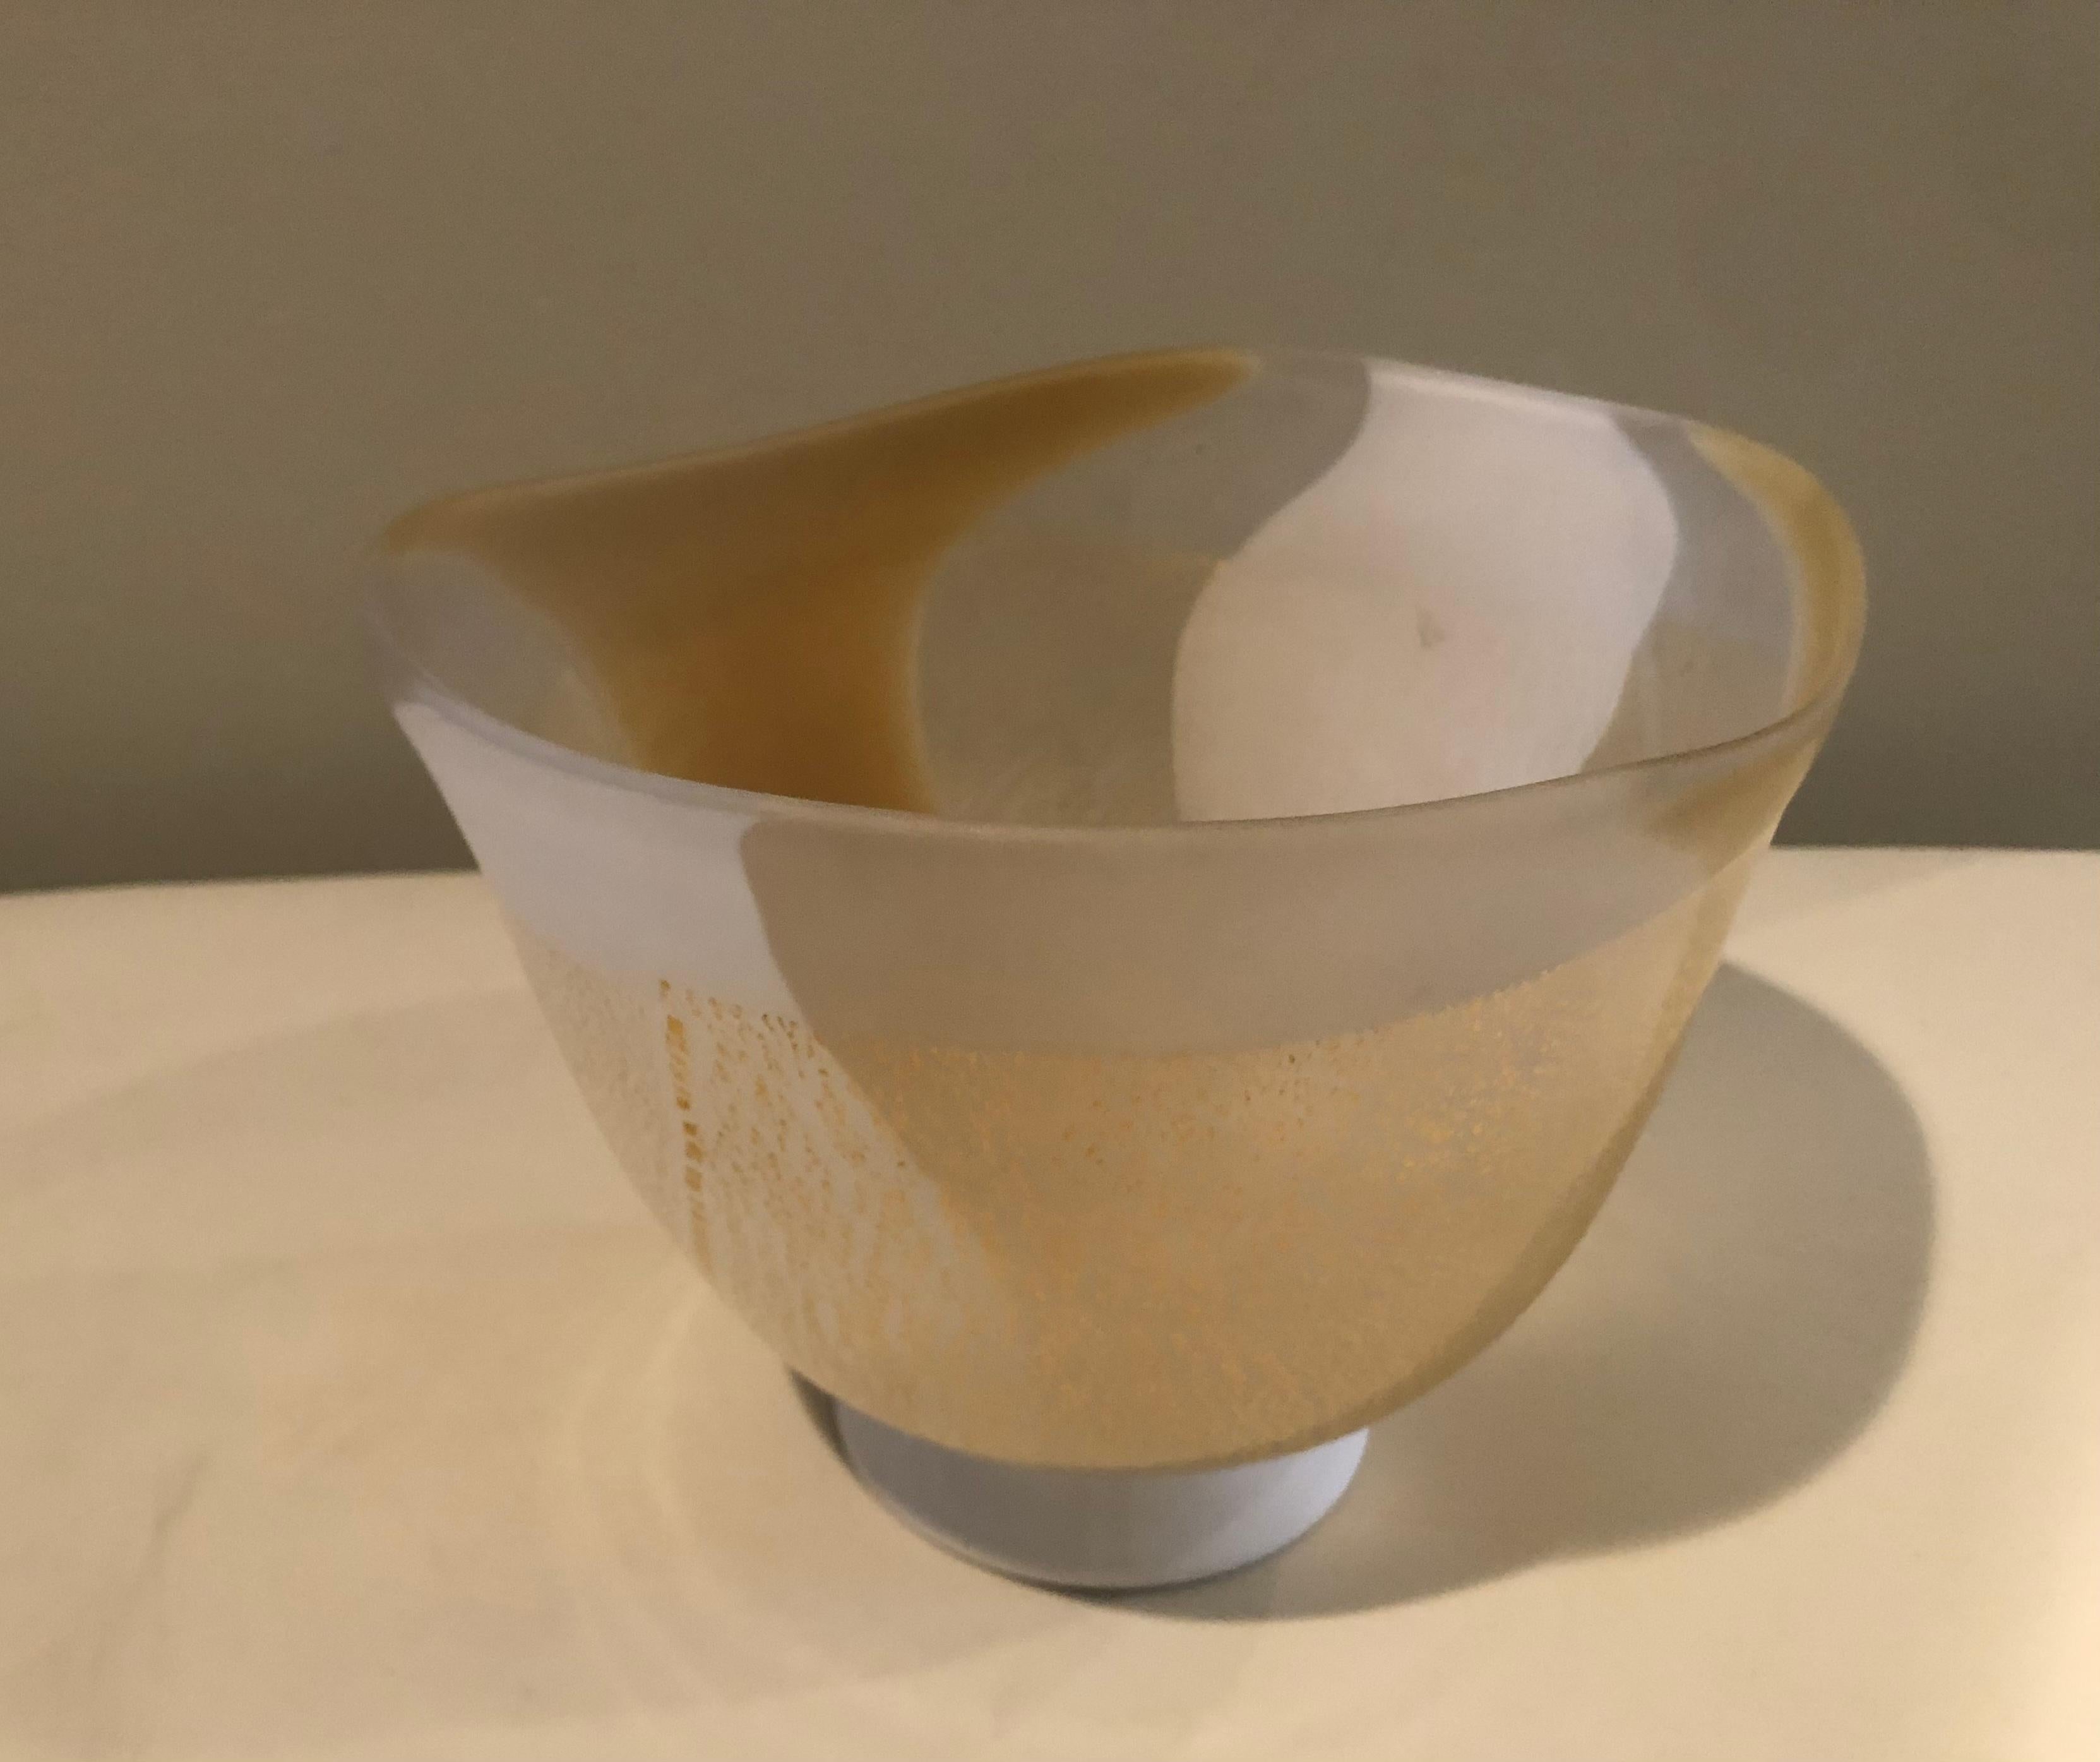 Kyohei Fujita Japanese Studio Glass Vase Signed by the Artist White Pasta Glass 1